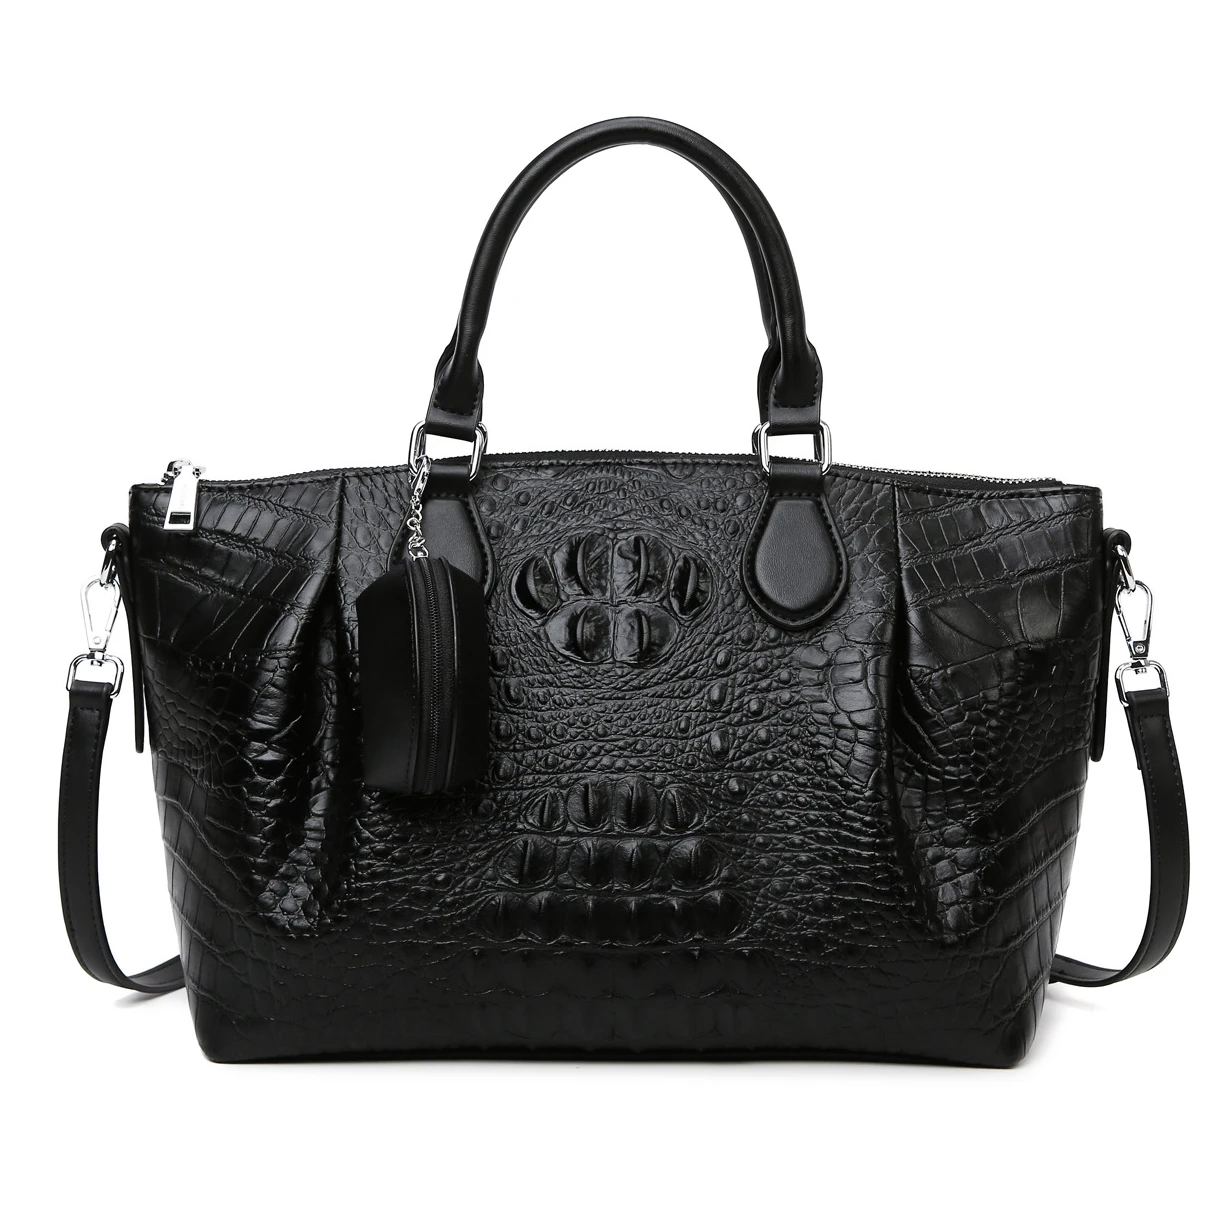 New Trend Crocodile Leather tote Bag Women's Leather Pu Fashion Shoulder Messenger Bag Handbag